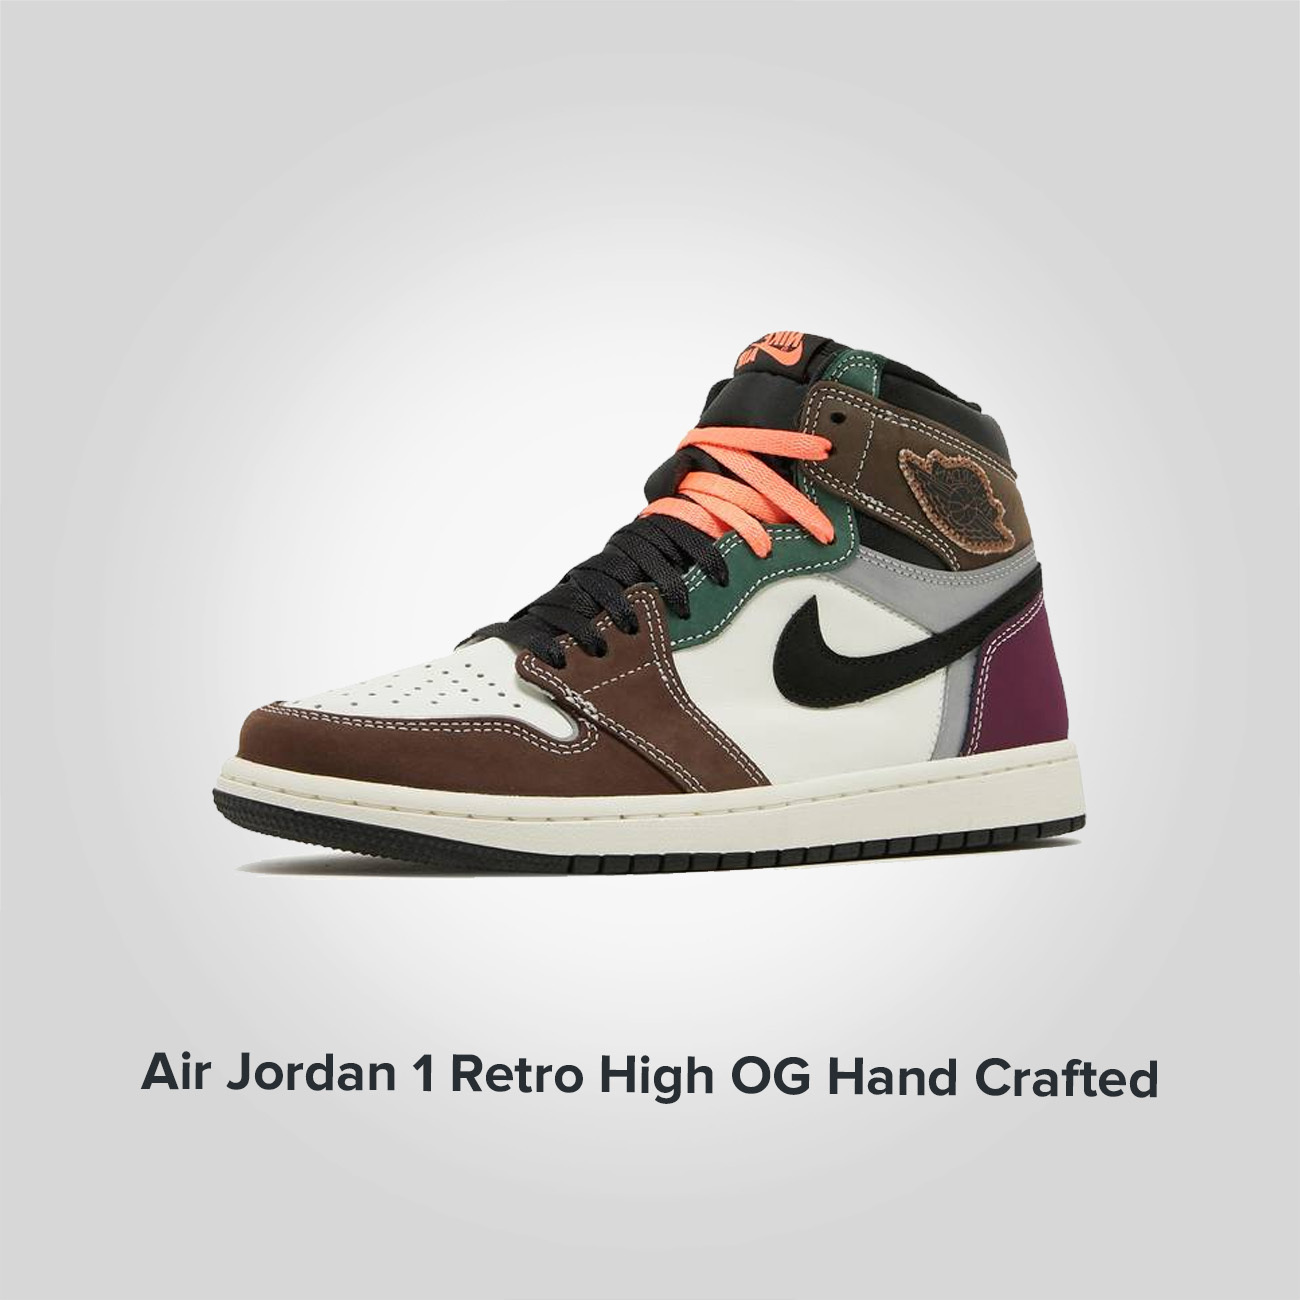 Jordan 1 Retro High OG Hand Crafted